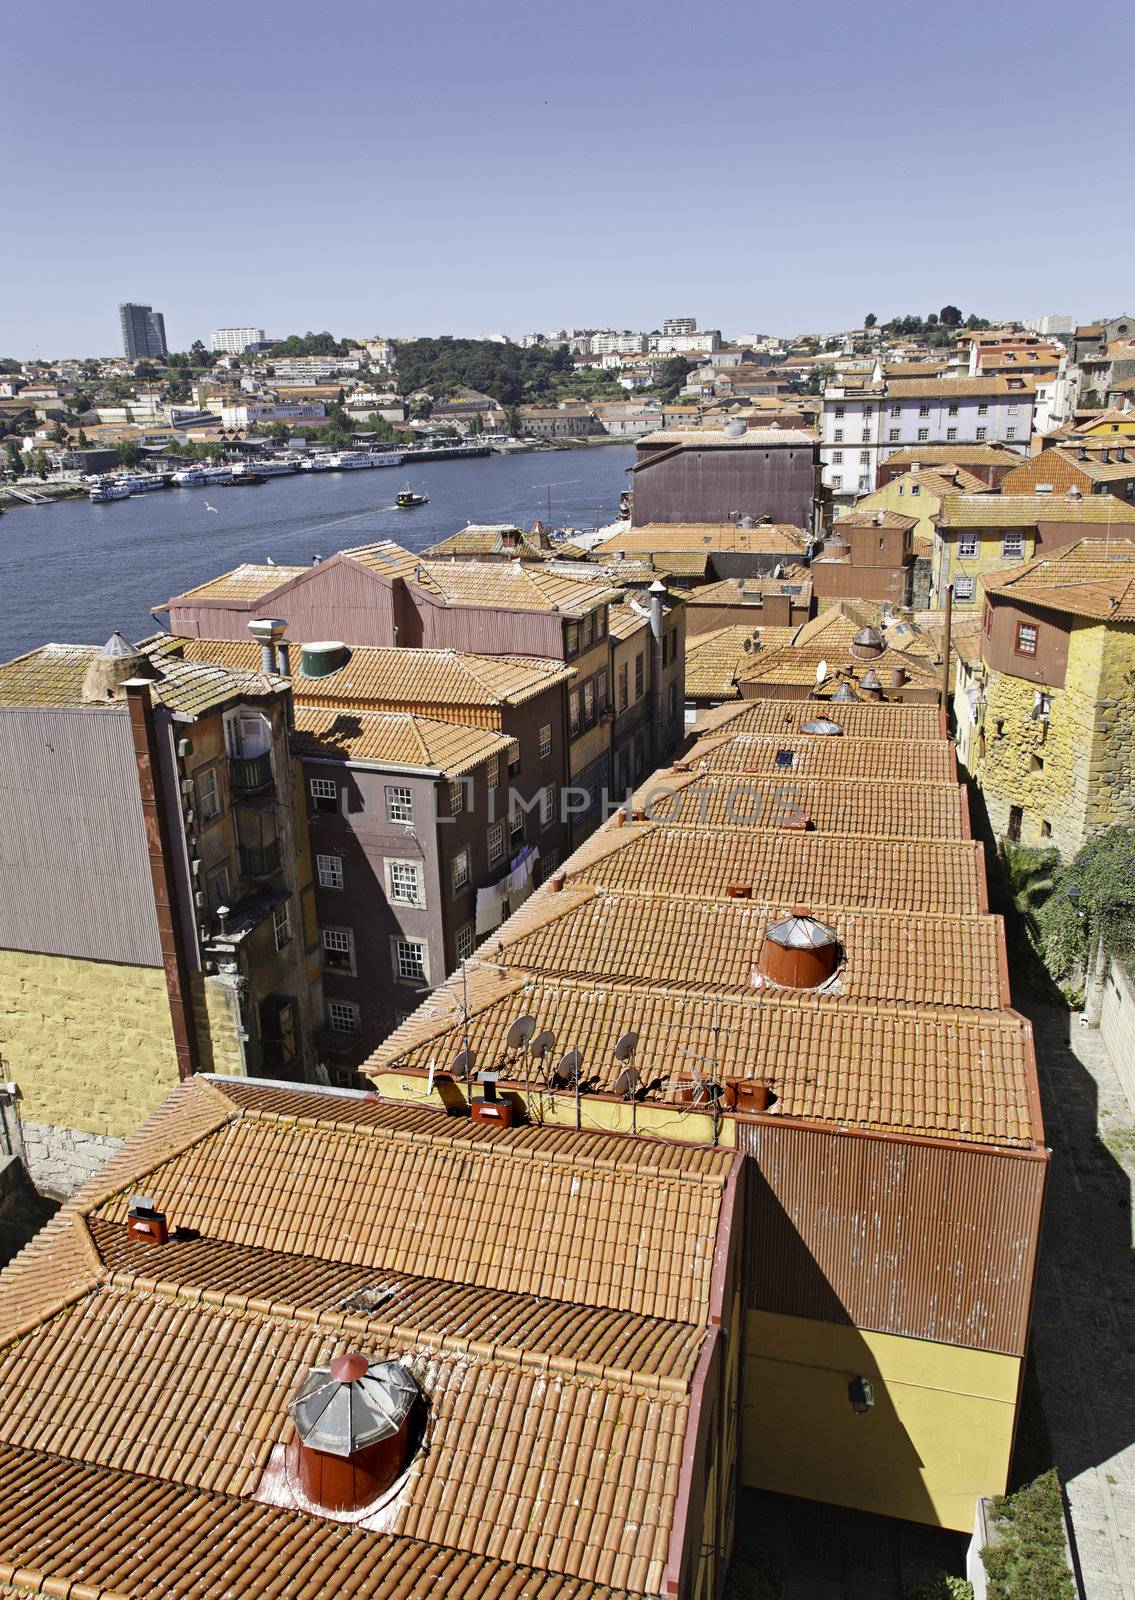 Roofs of Porto by esebene